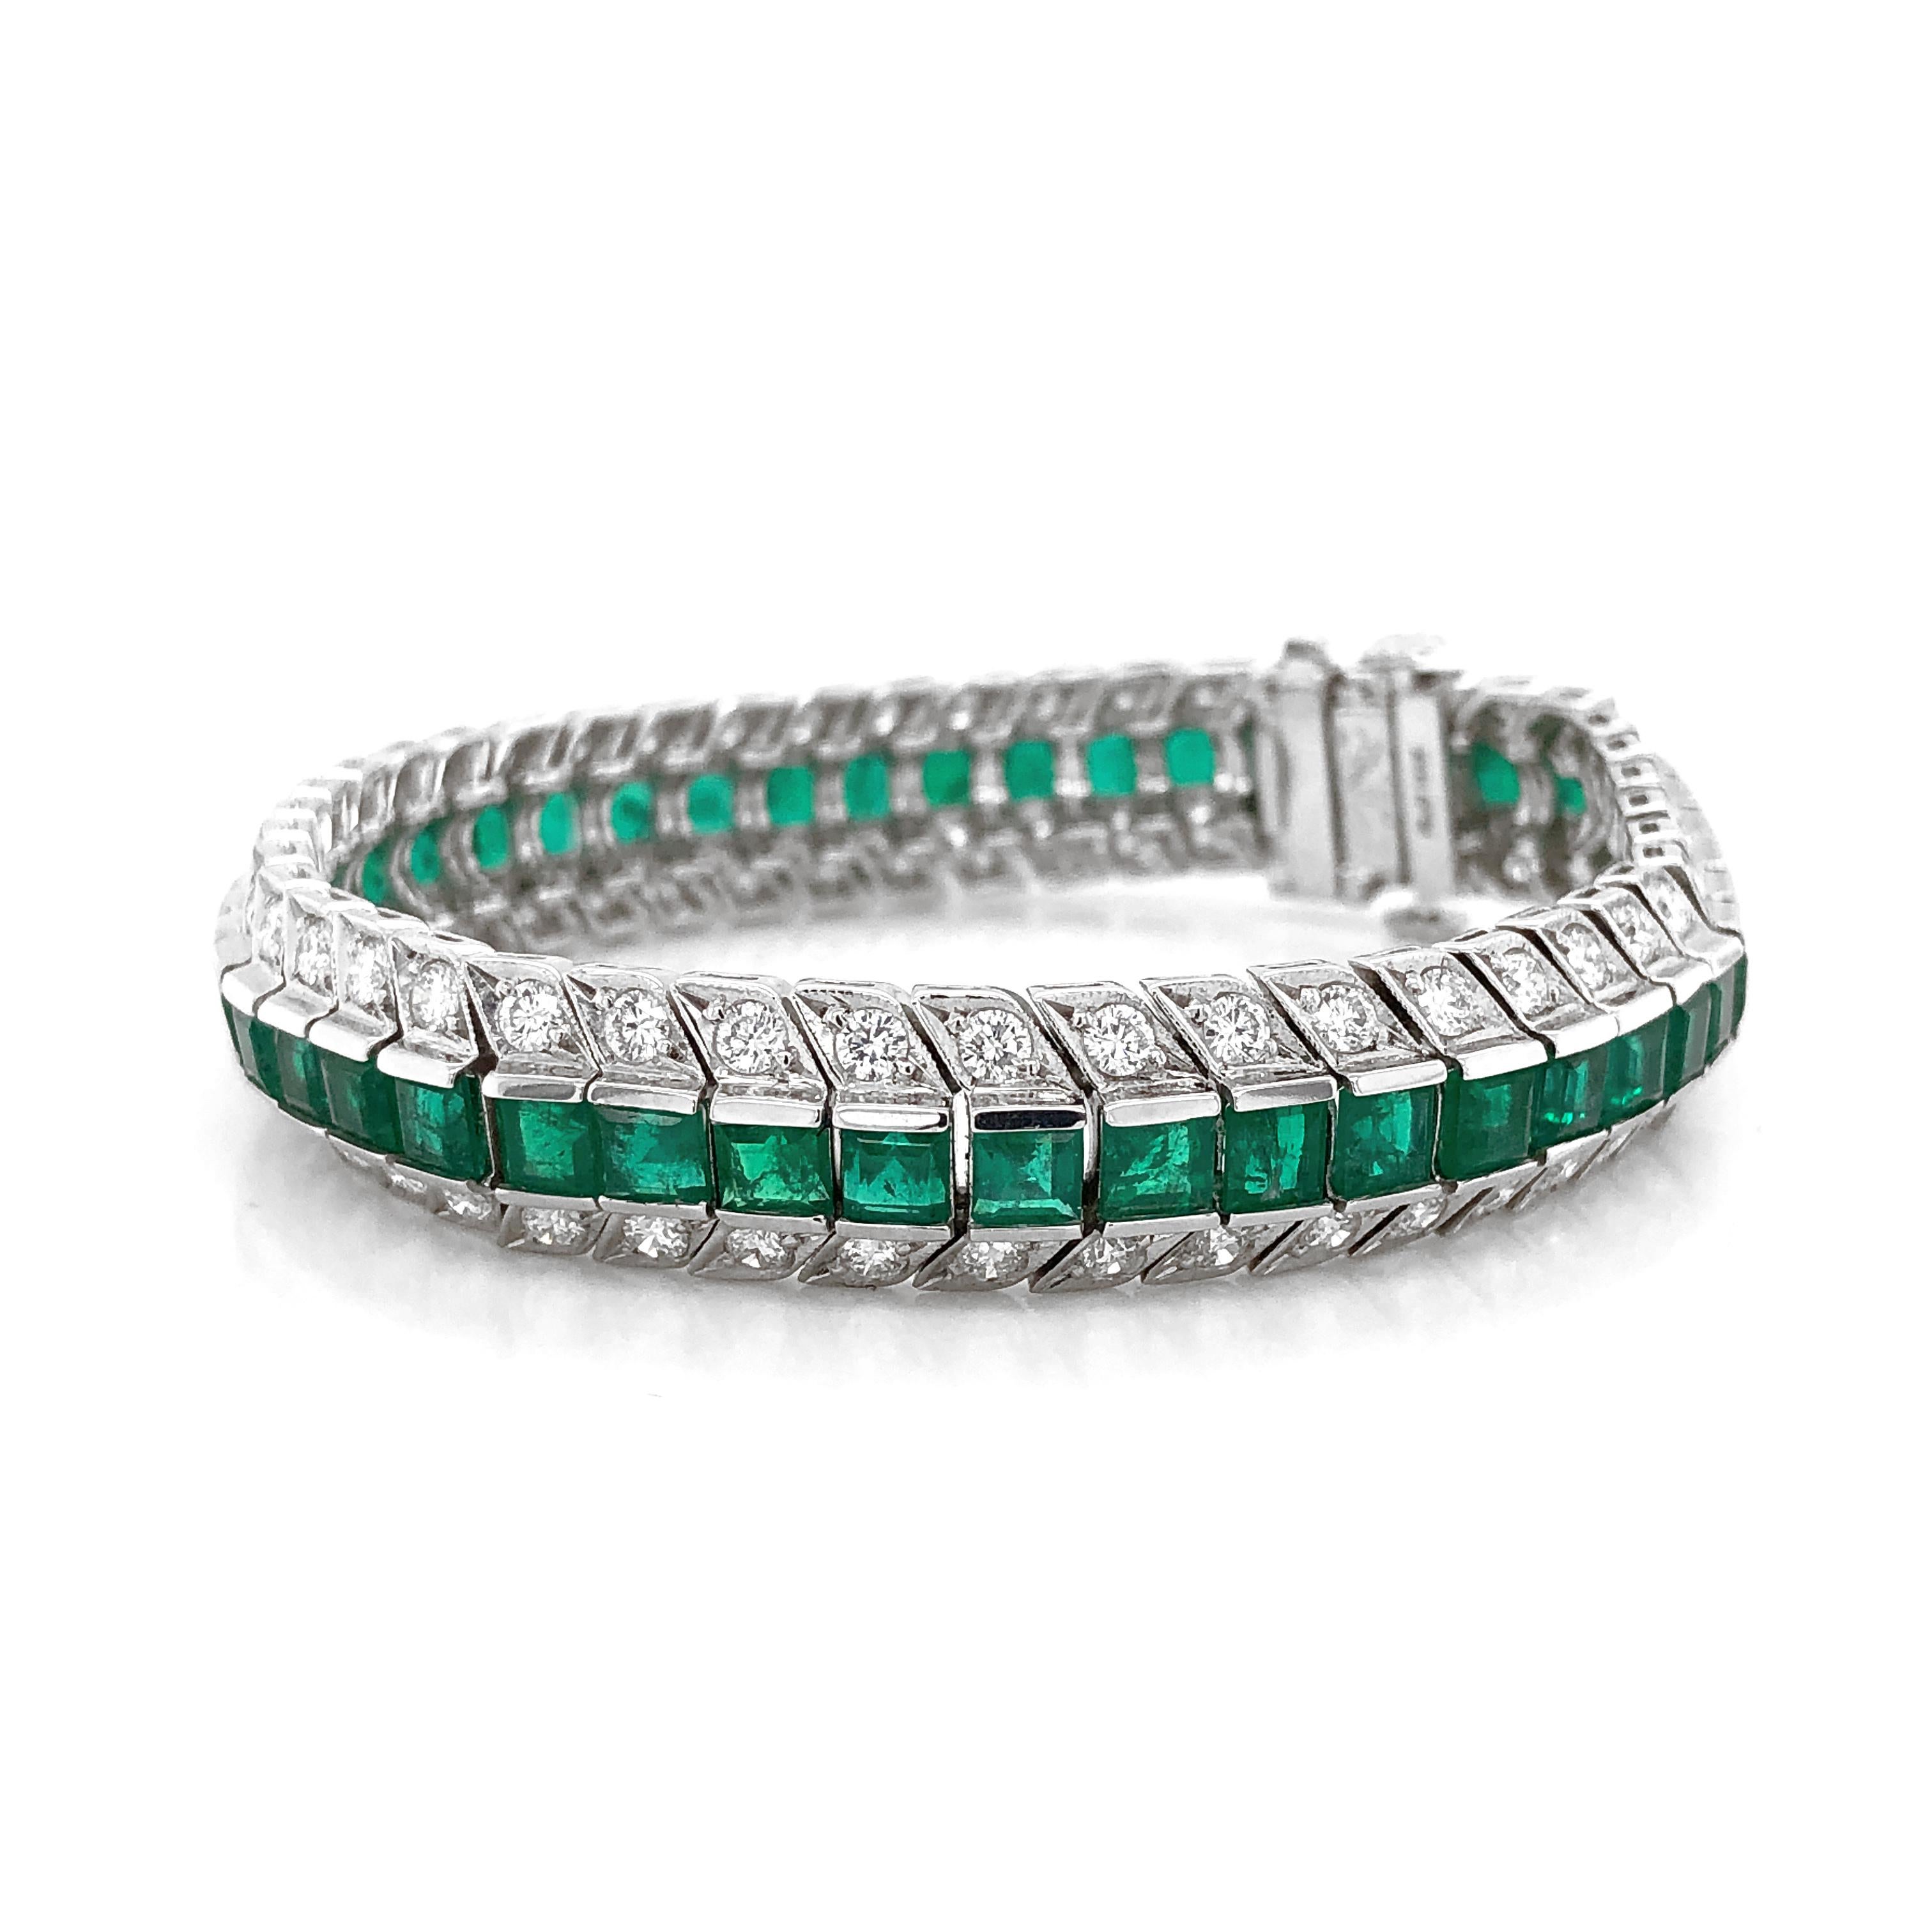 Round Cut Zambian Square Cut Emeralds 14.28 Carat Diamond Platinum Link Bracelet For Sale